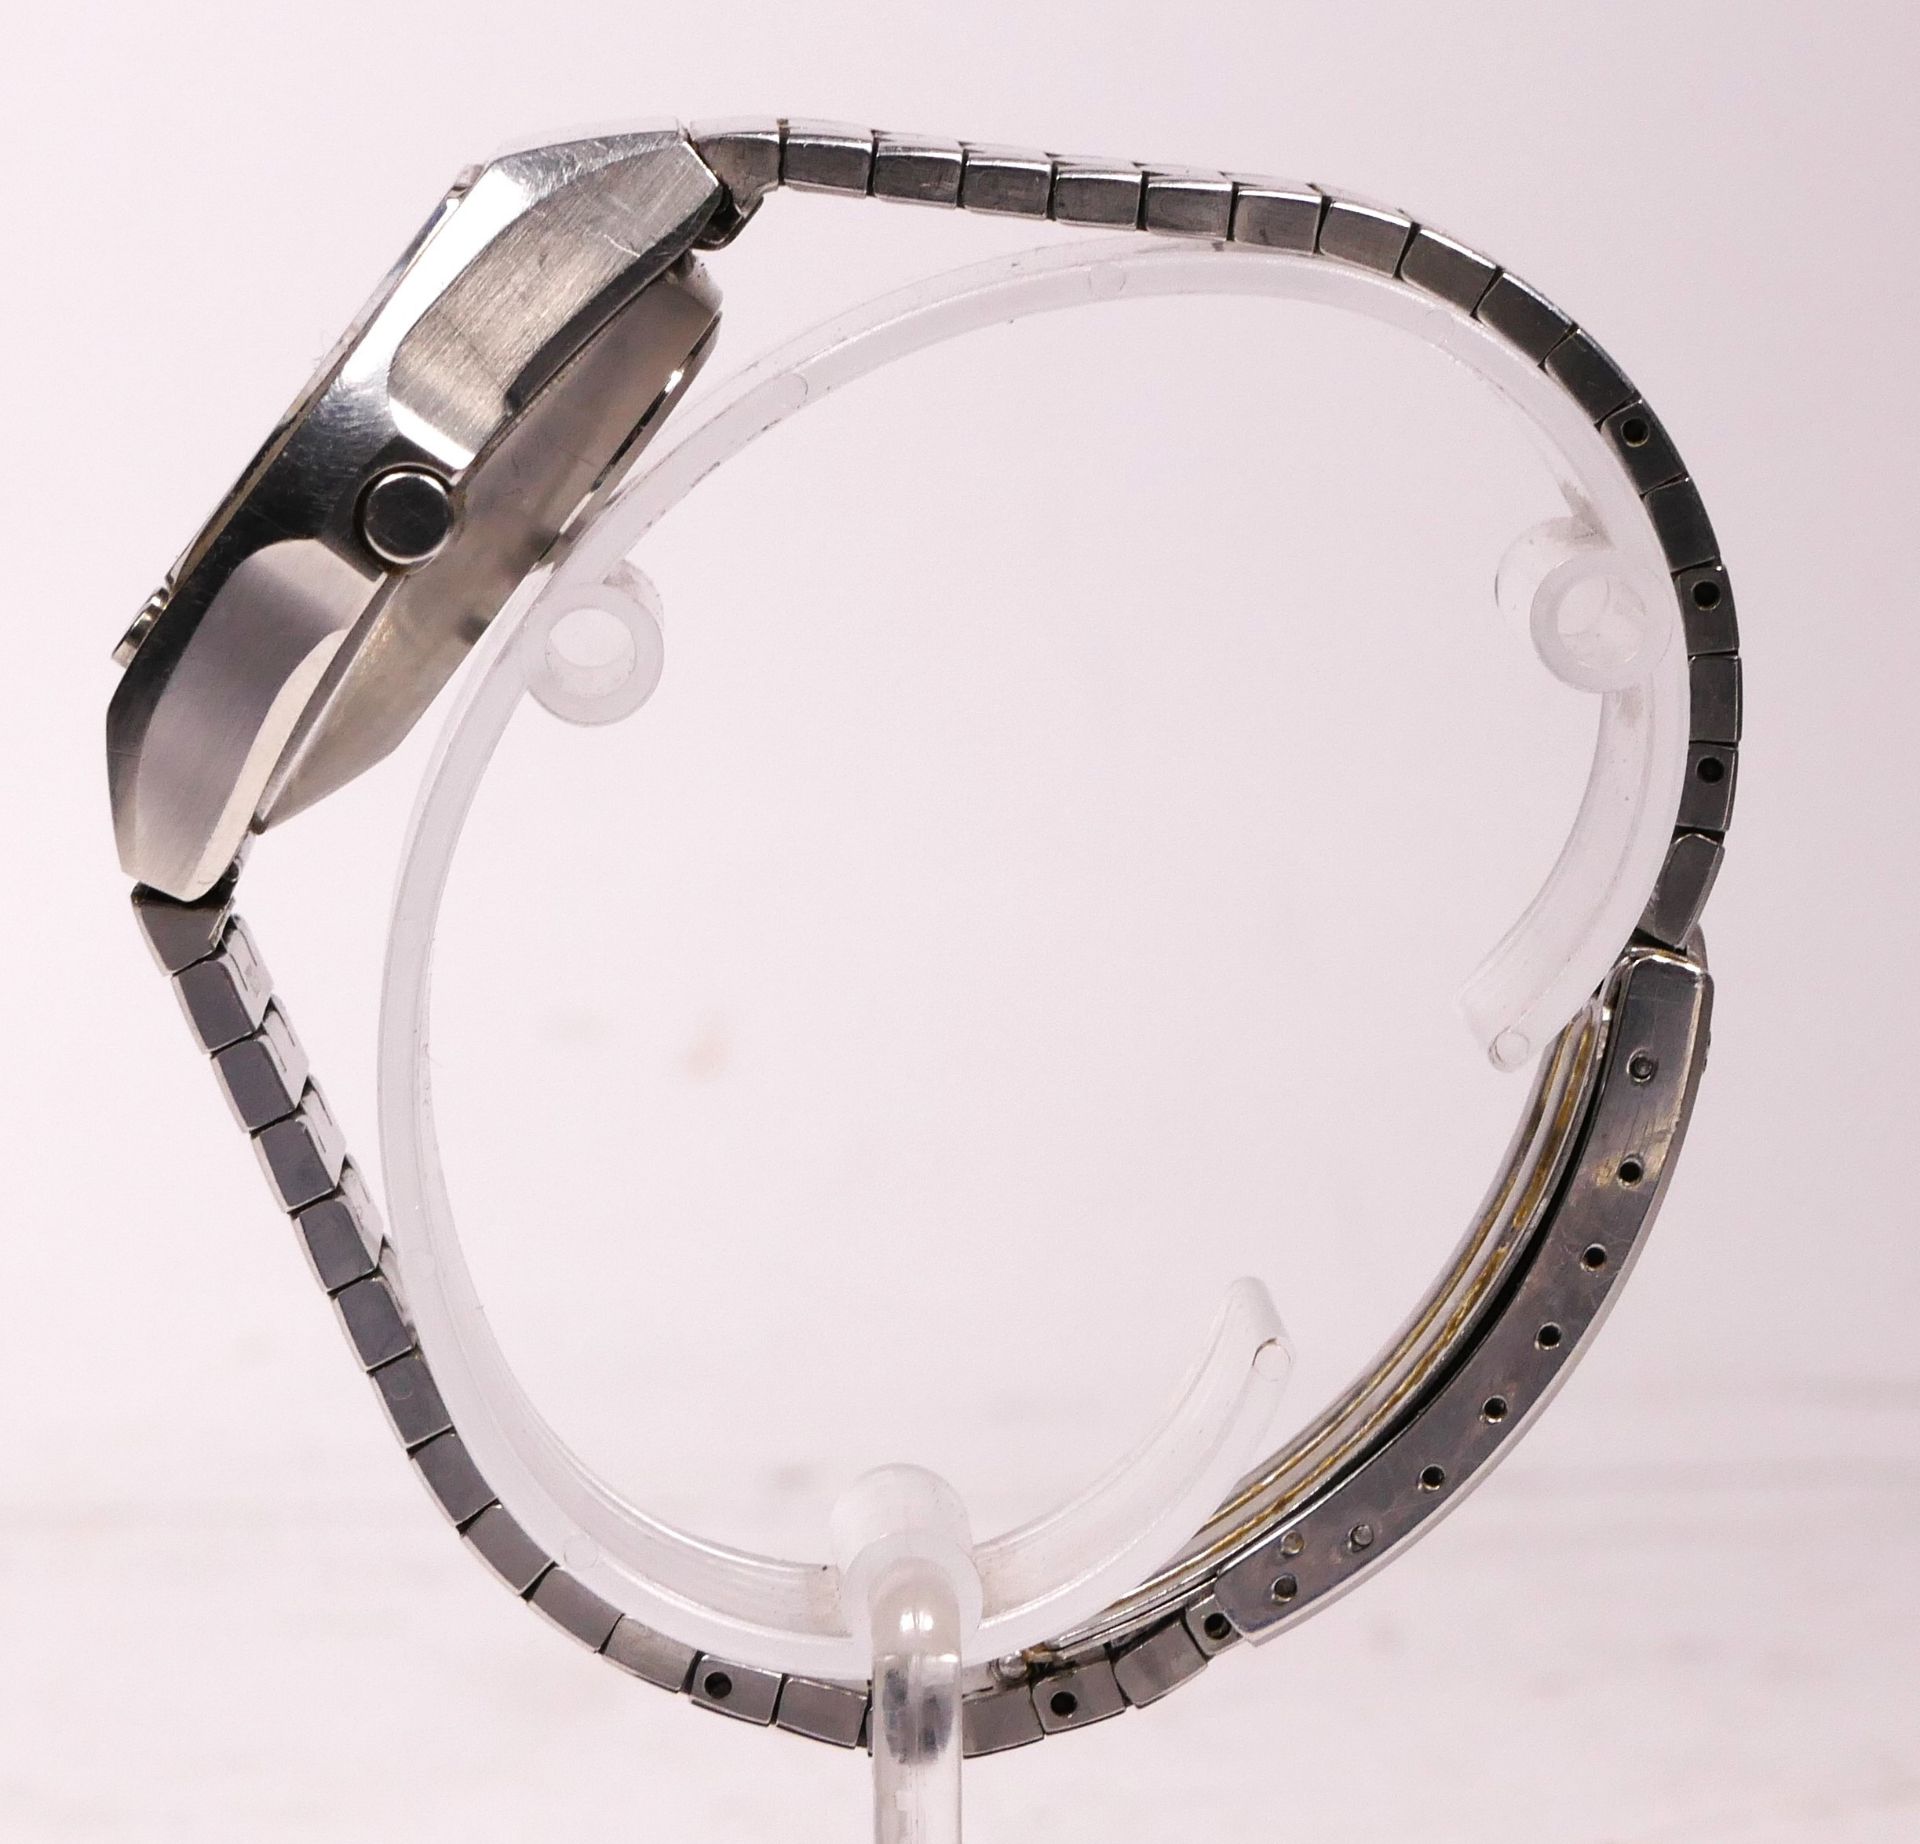 Seiko Quartz LC Chronograph gentleman's stainless steel wristwatch, model no. 0634-5009, the - Image 3 of 4